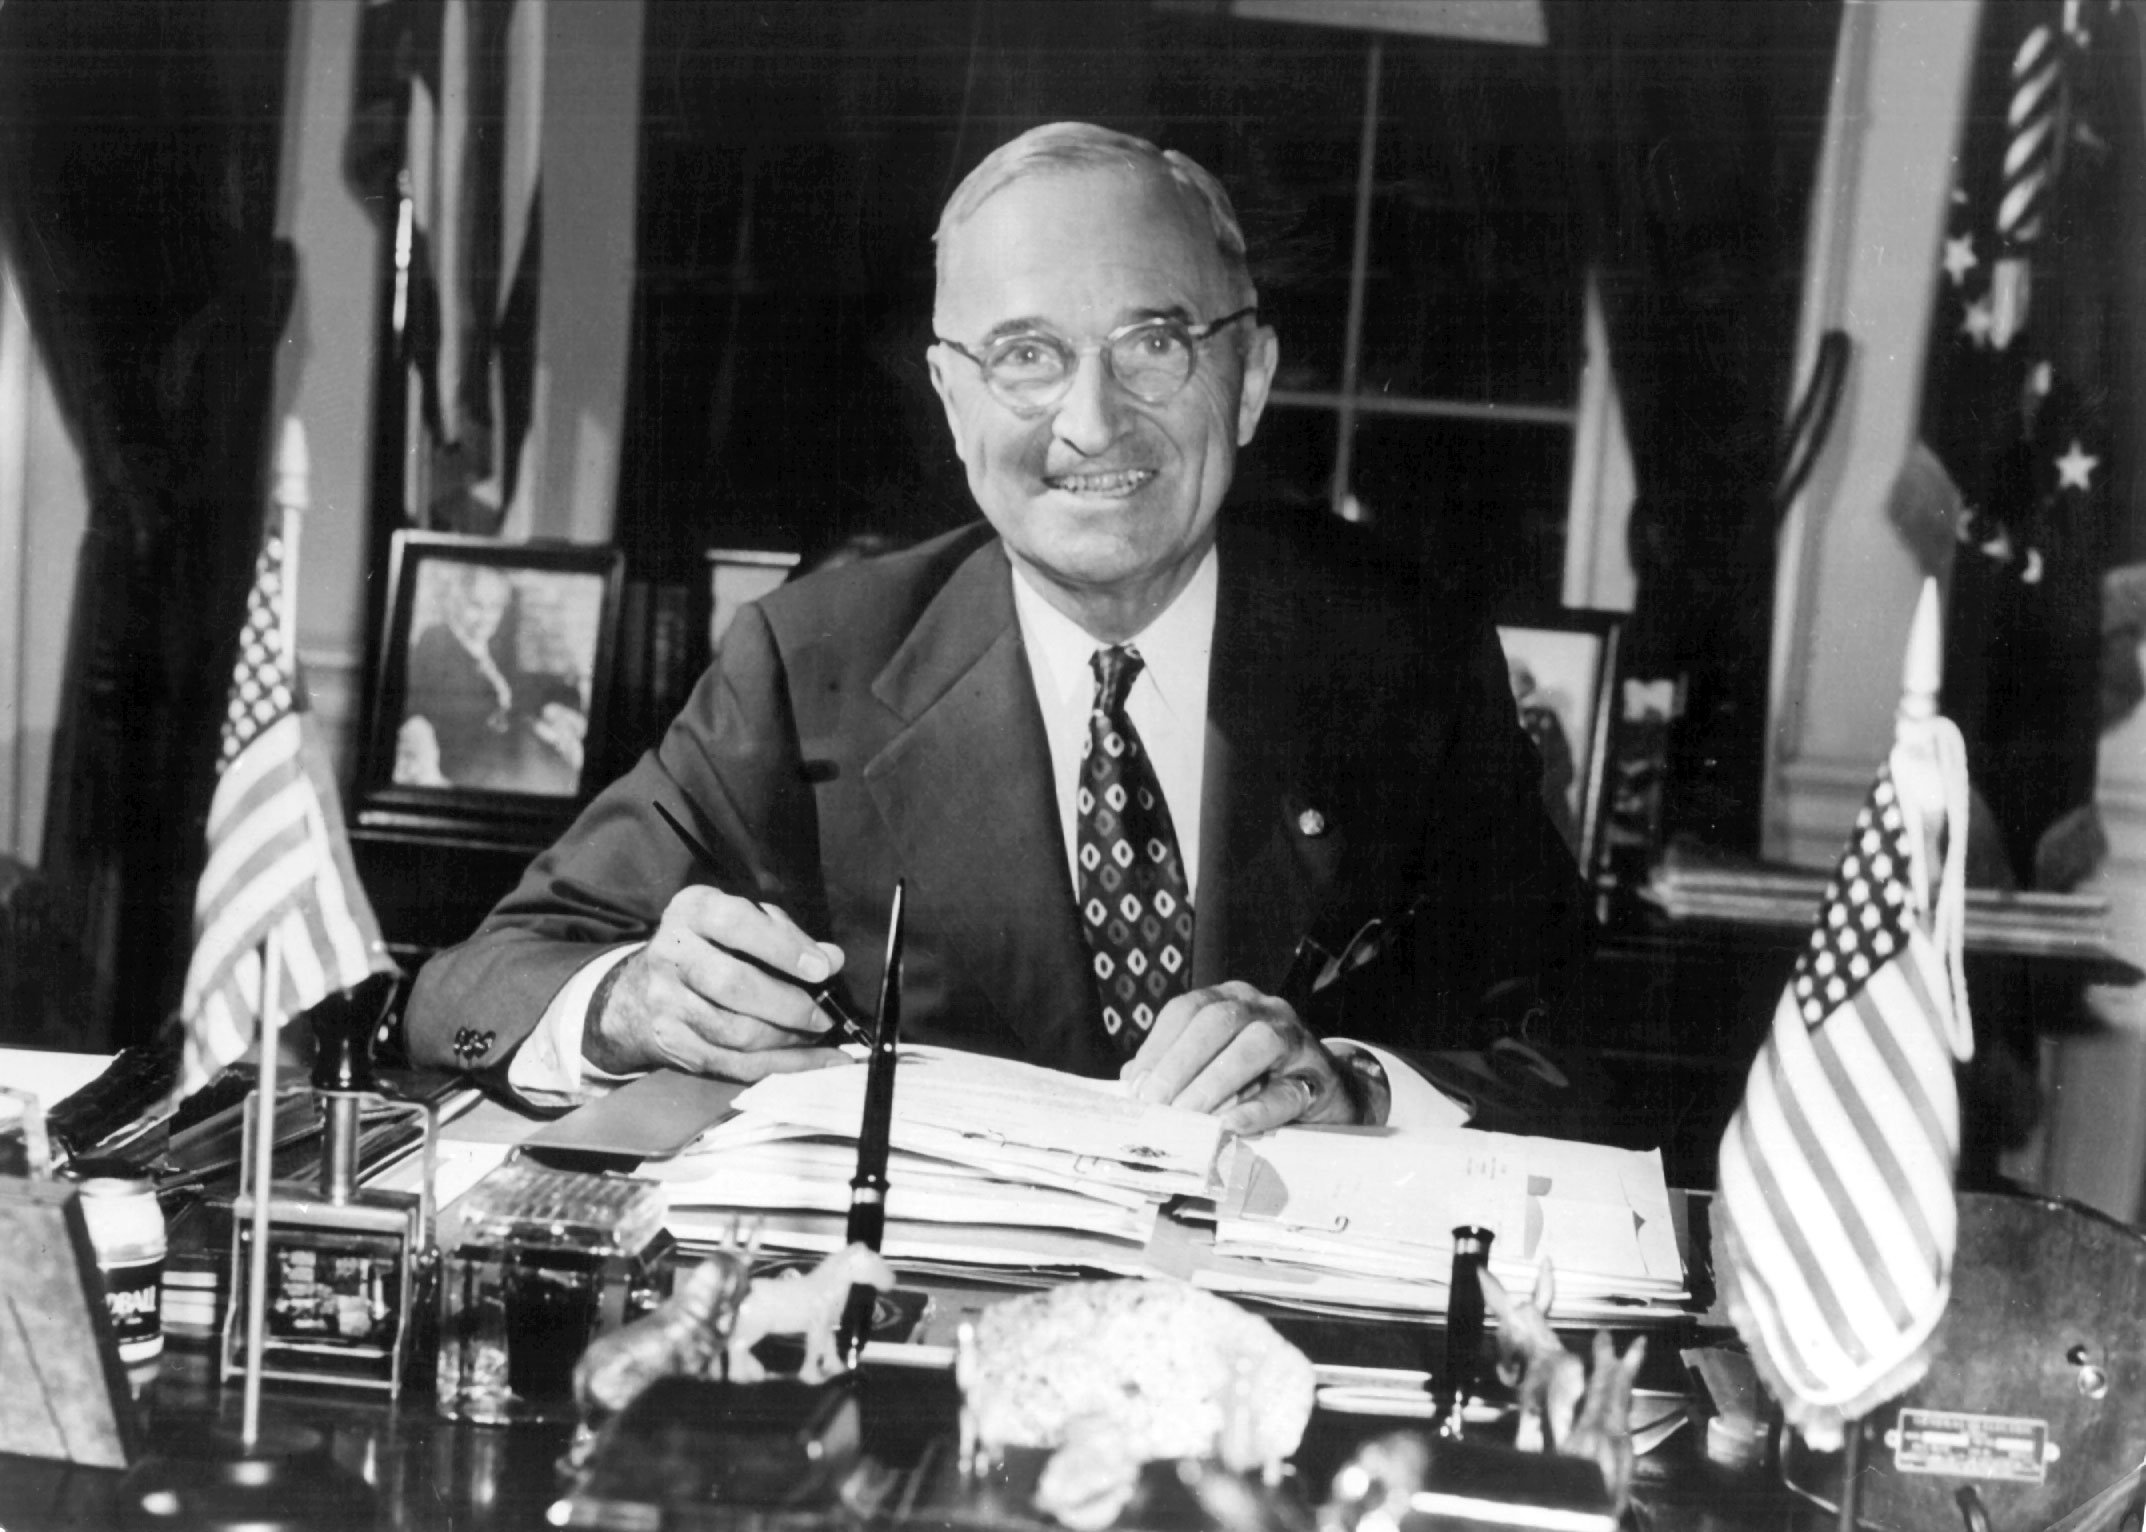 20201008-image-dpa-morning briefing-Harry S. Truman